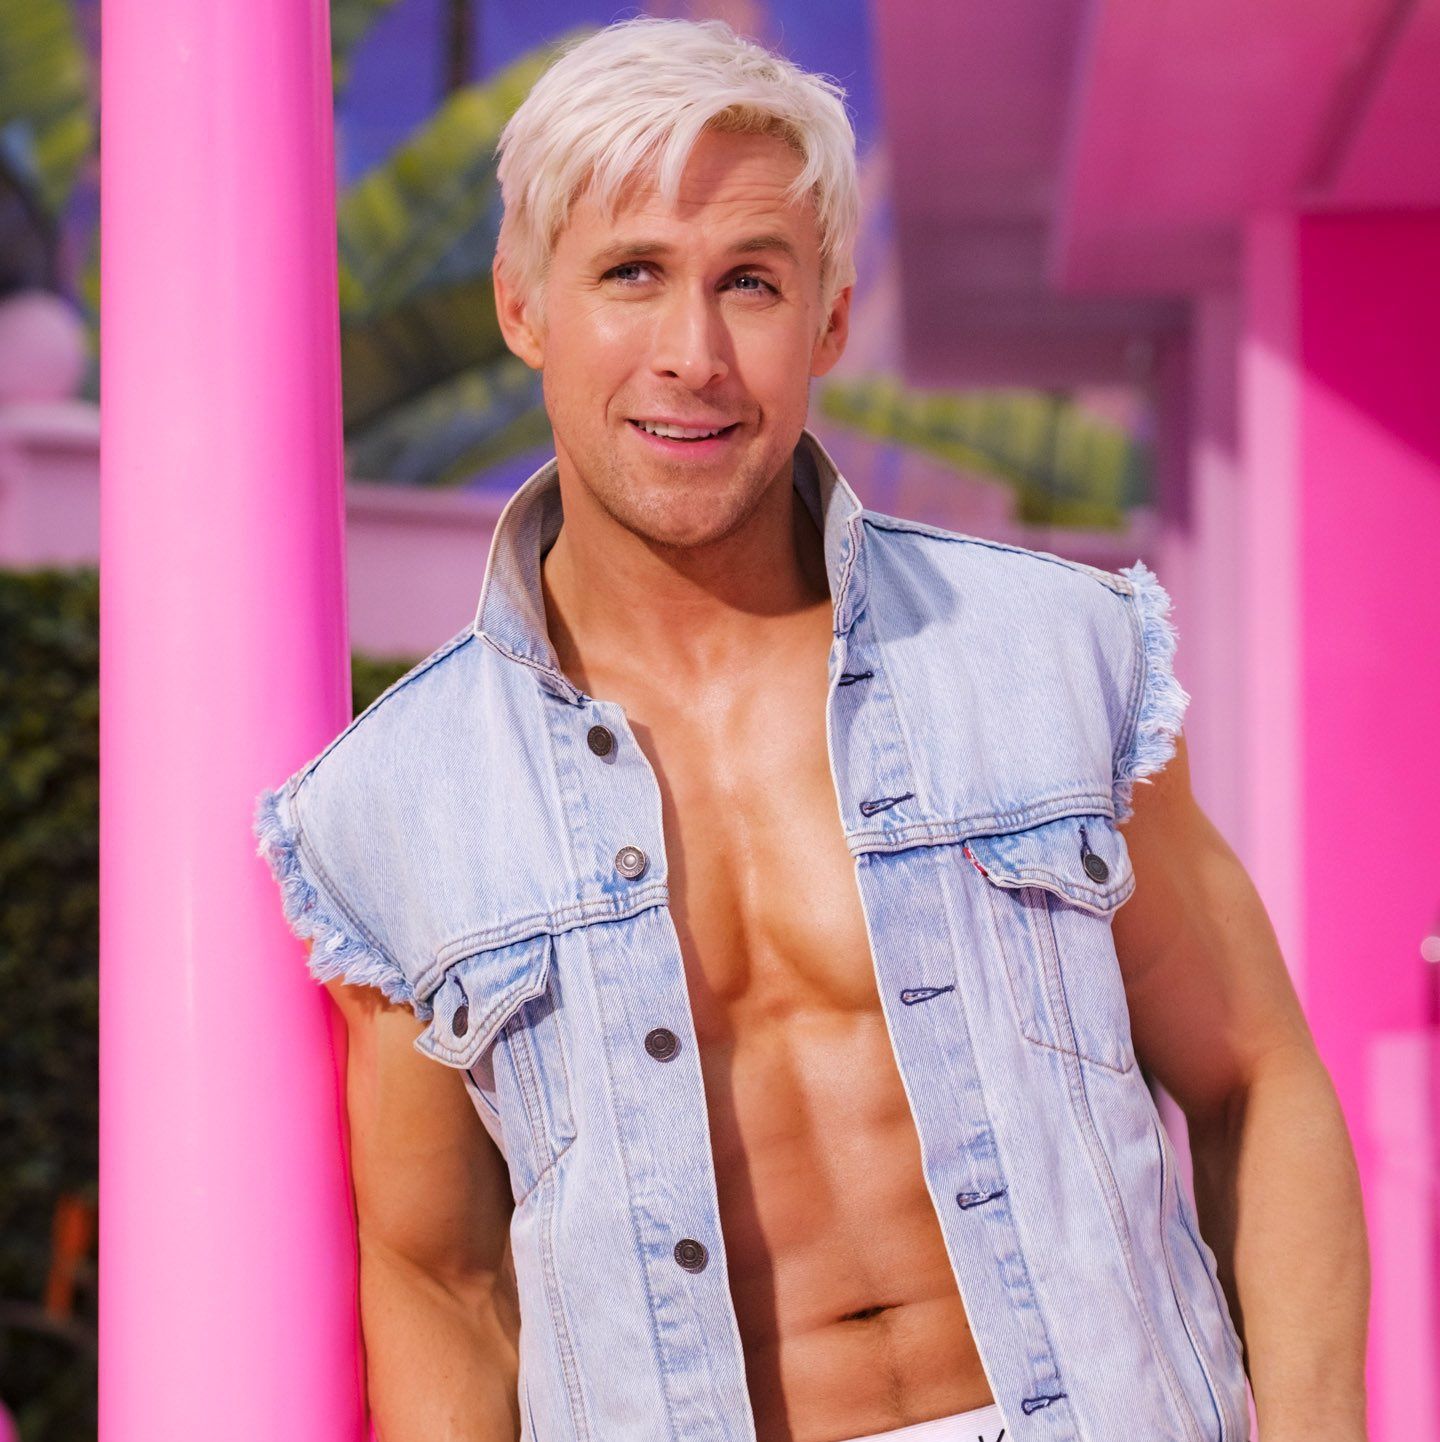 Ryan Gosling Shows Off His Six-Pack as Ken in ‘Barbie’ Photo